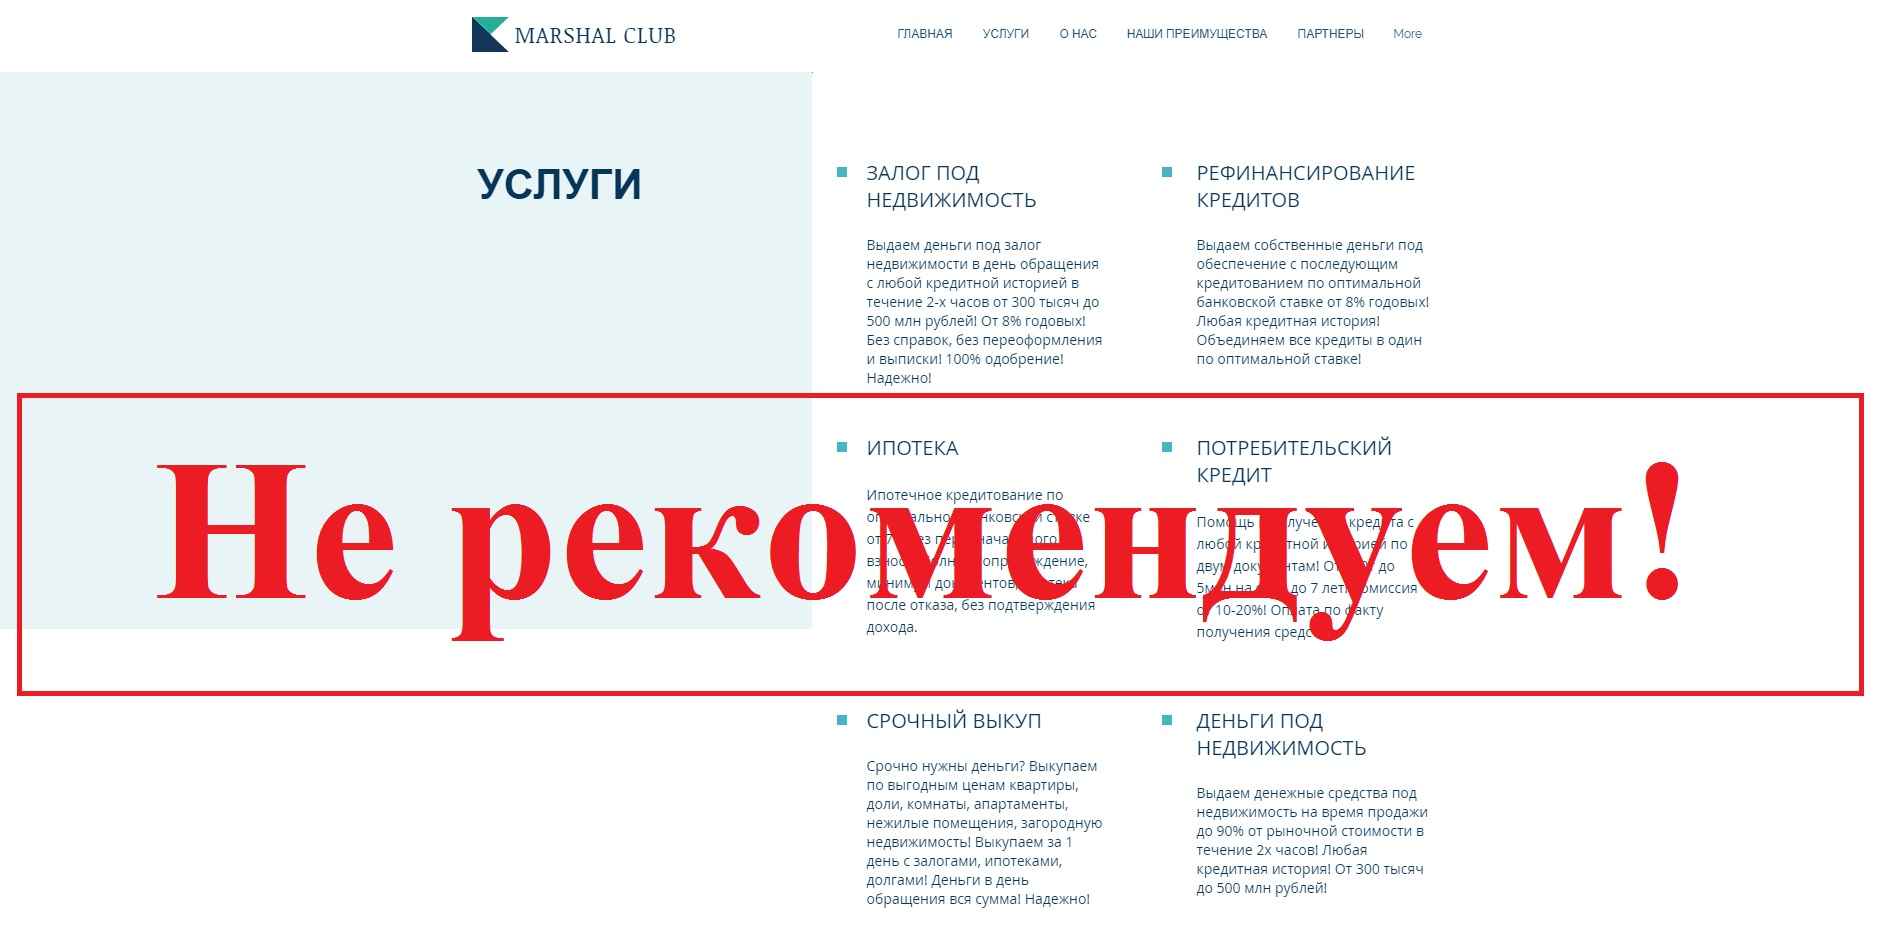 Marshal Club – обзор и отзывы о marshalclub.ru